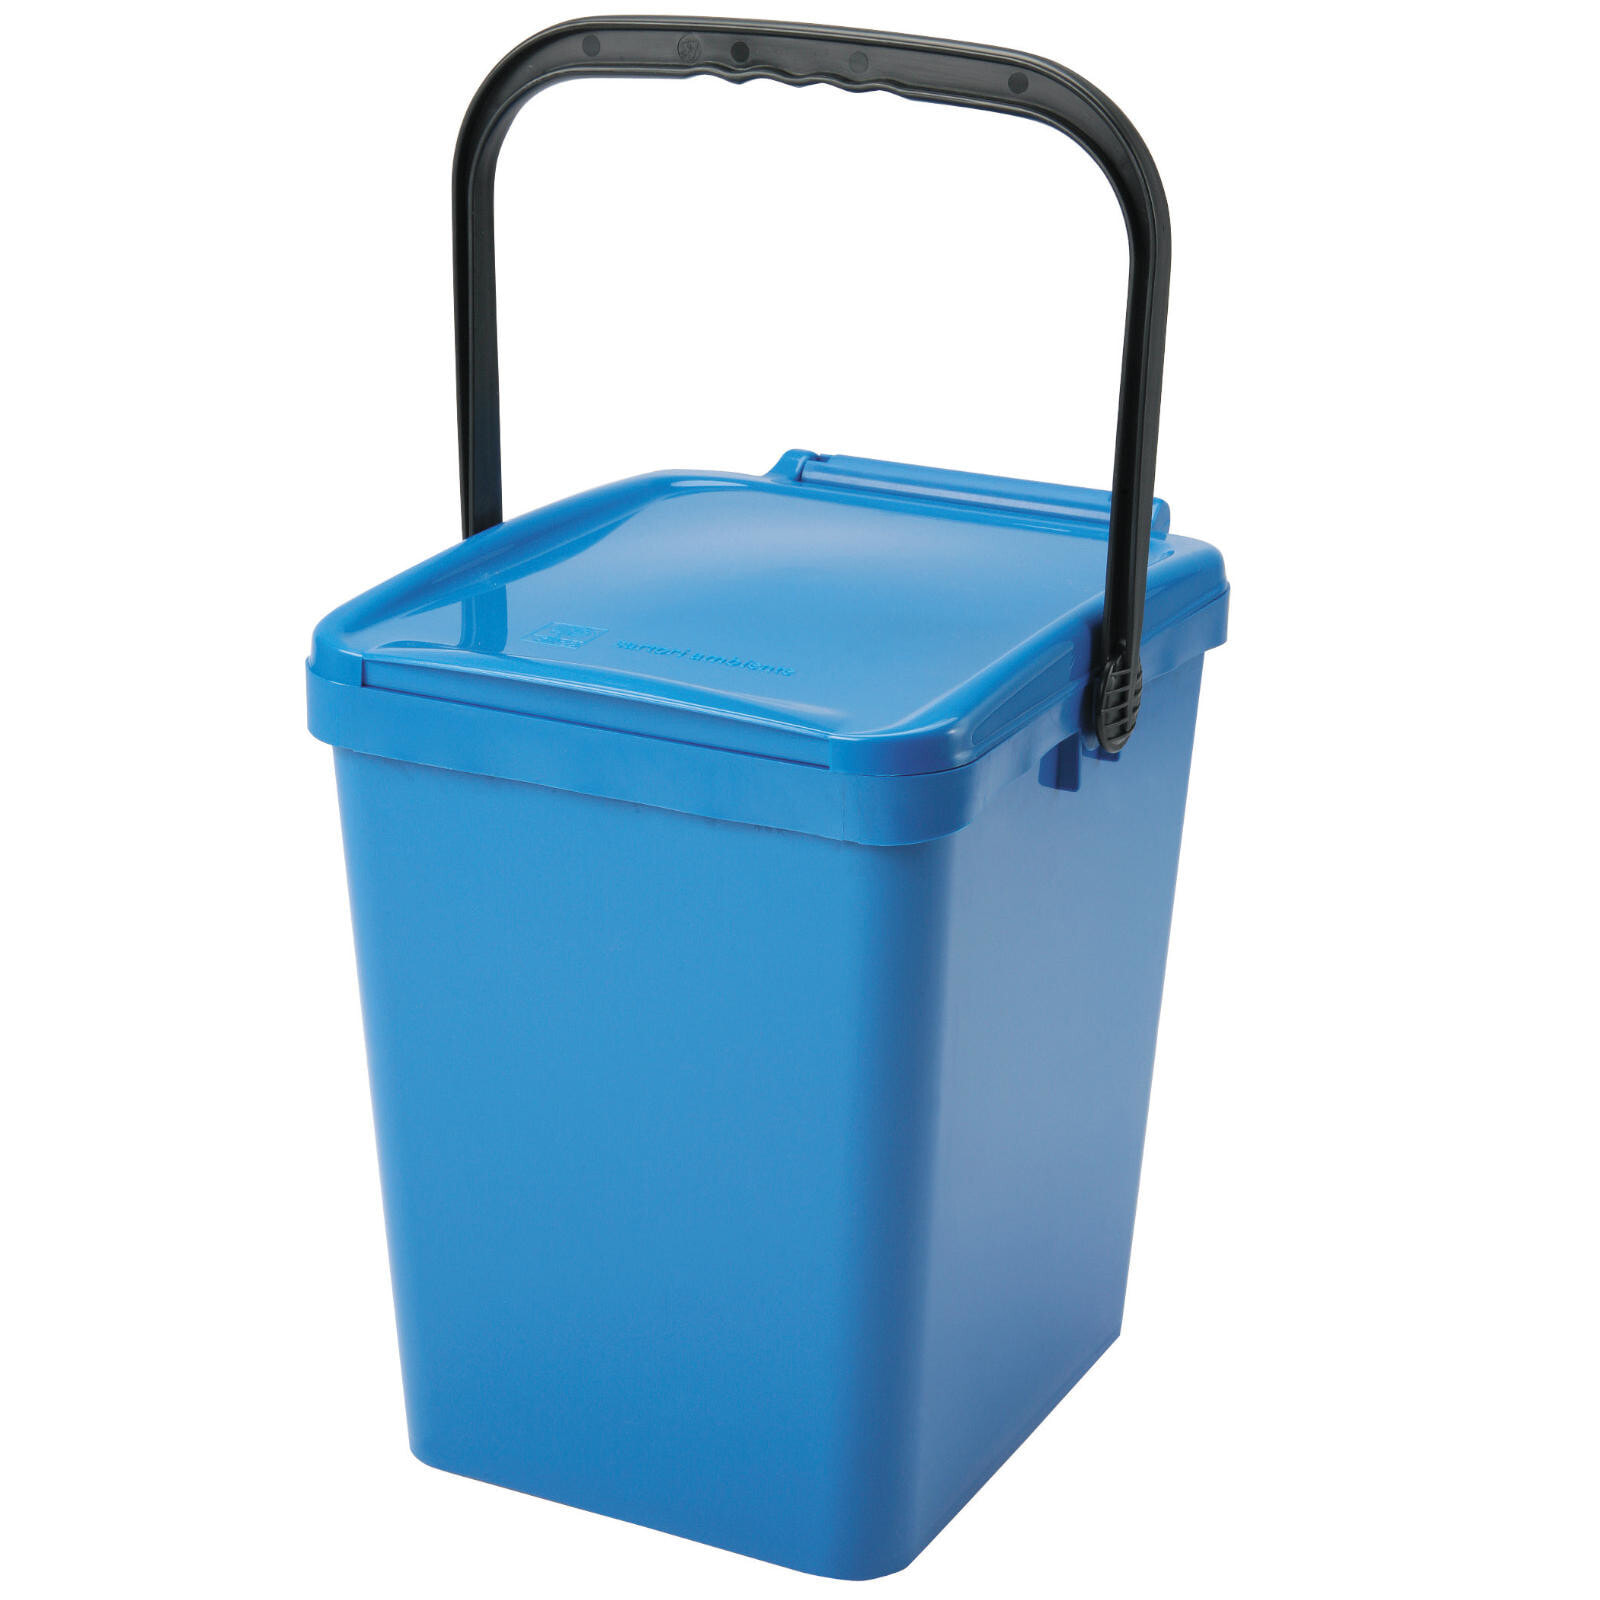 Trash bin for sorting garbage and waste - blue Urba 21L